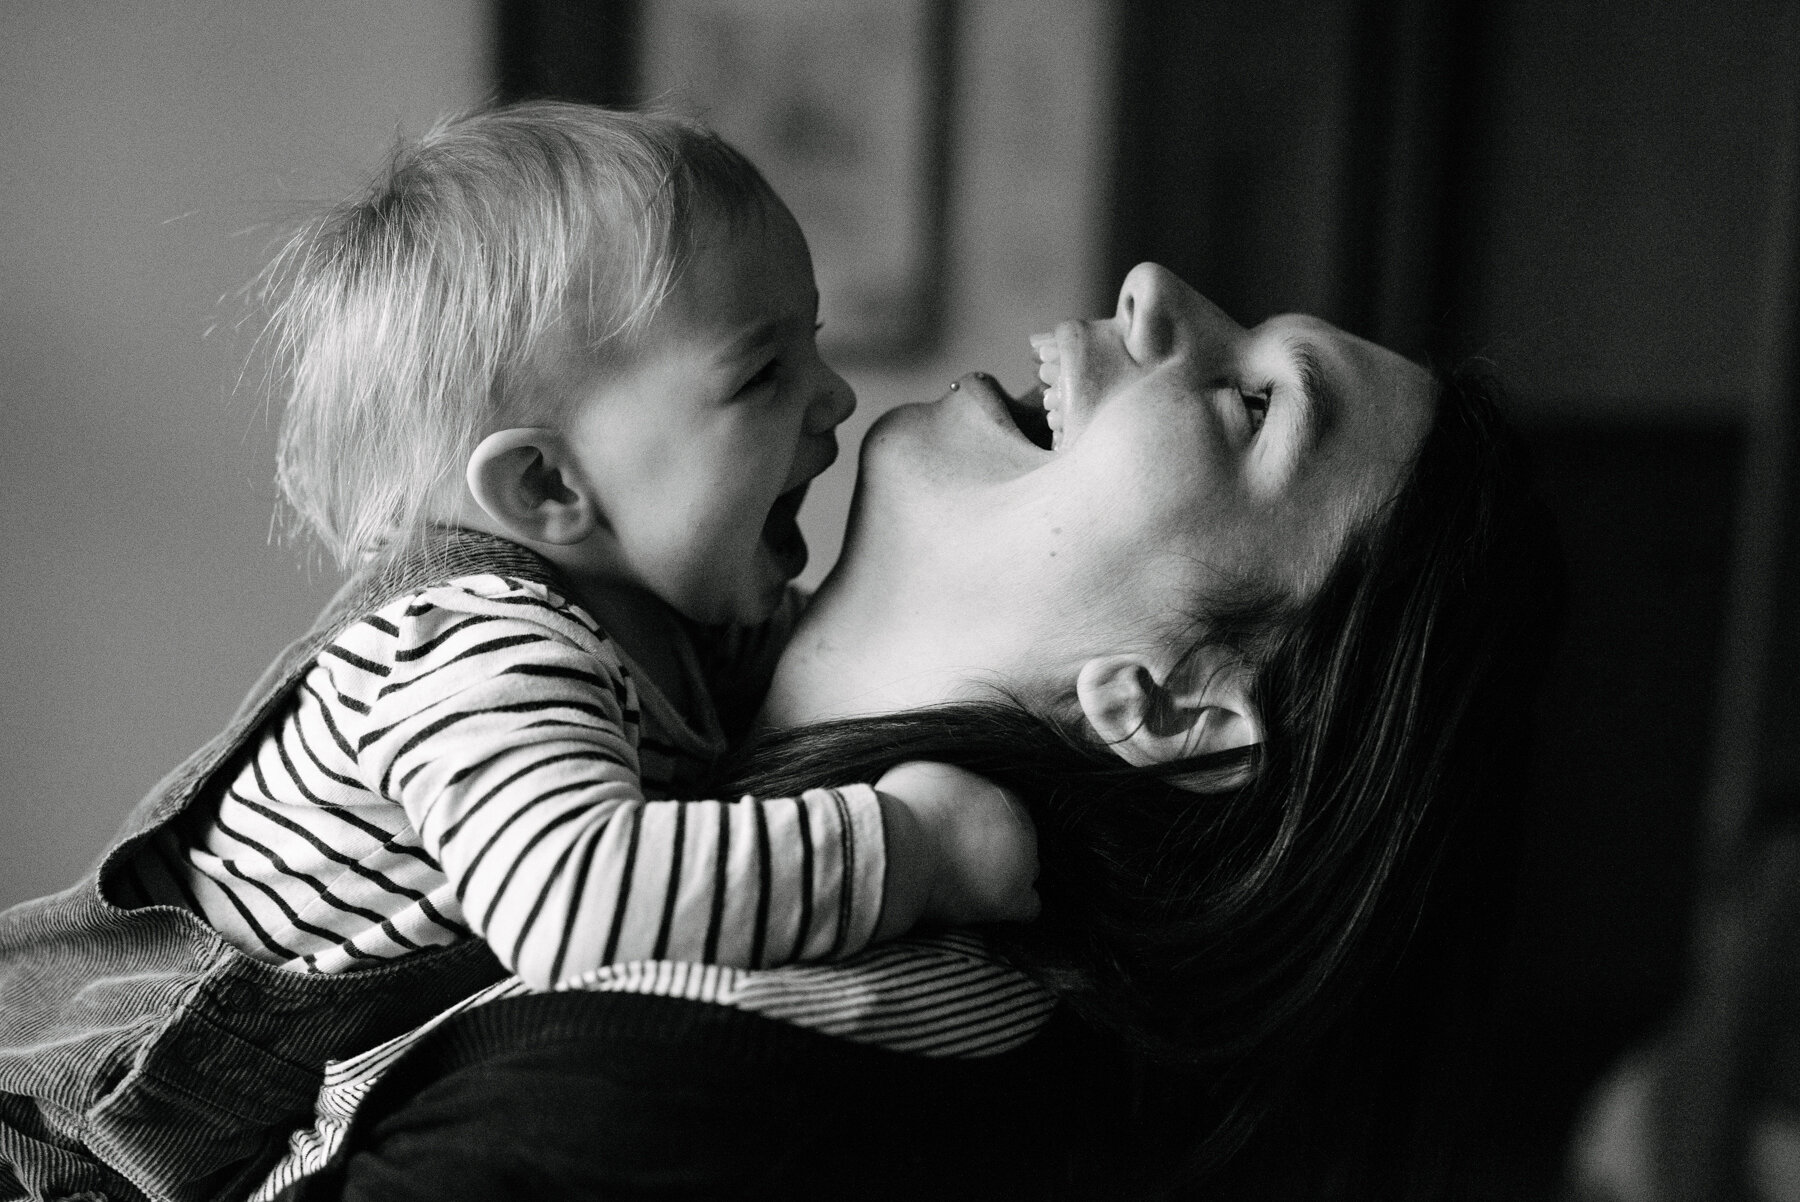 seance-mere-maman-enfant-maternite-allaitement-a-domicile-appartement-montrealais-intimite-photographe-famille-documentaire-a-montreal-marianne-charland-355-2.jpg